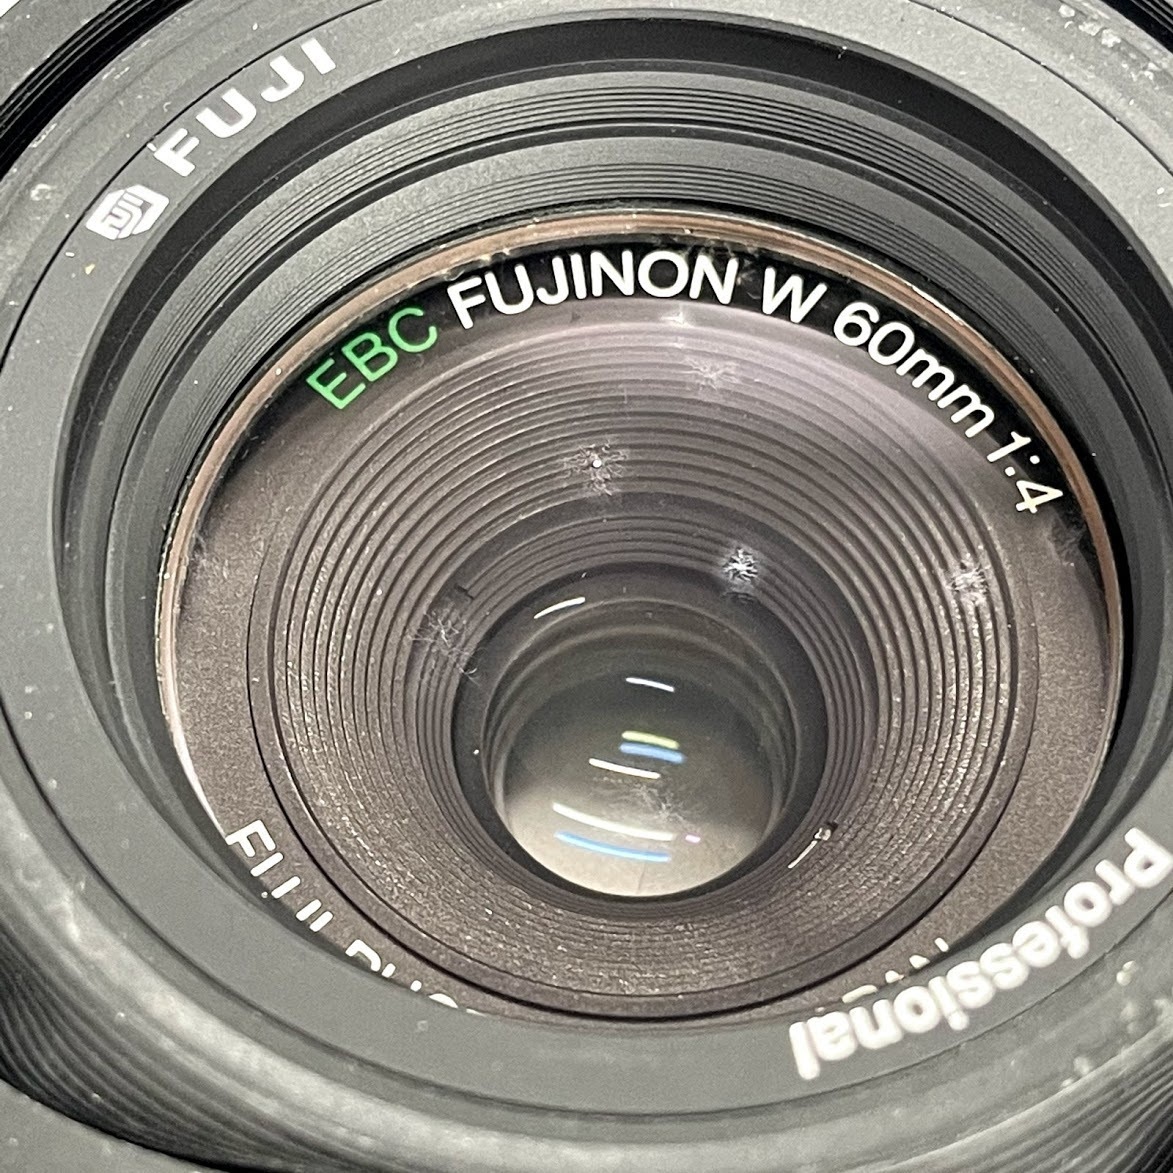 FUJI フジ 6x4.5 GS645S Professional wide60 EBC FUJINON W 60mm F4 中判フイルムカメラ レンジファインダー2